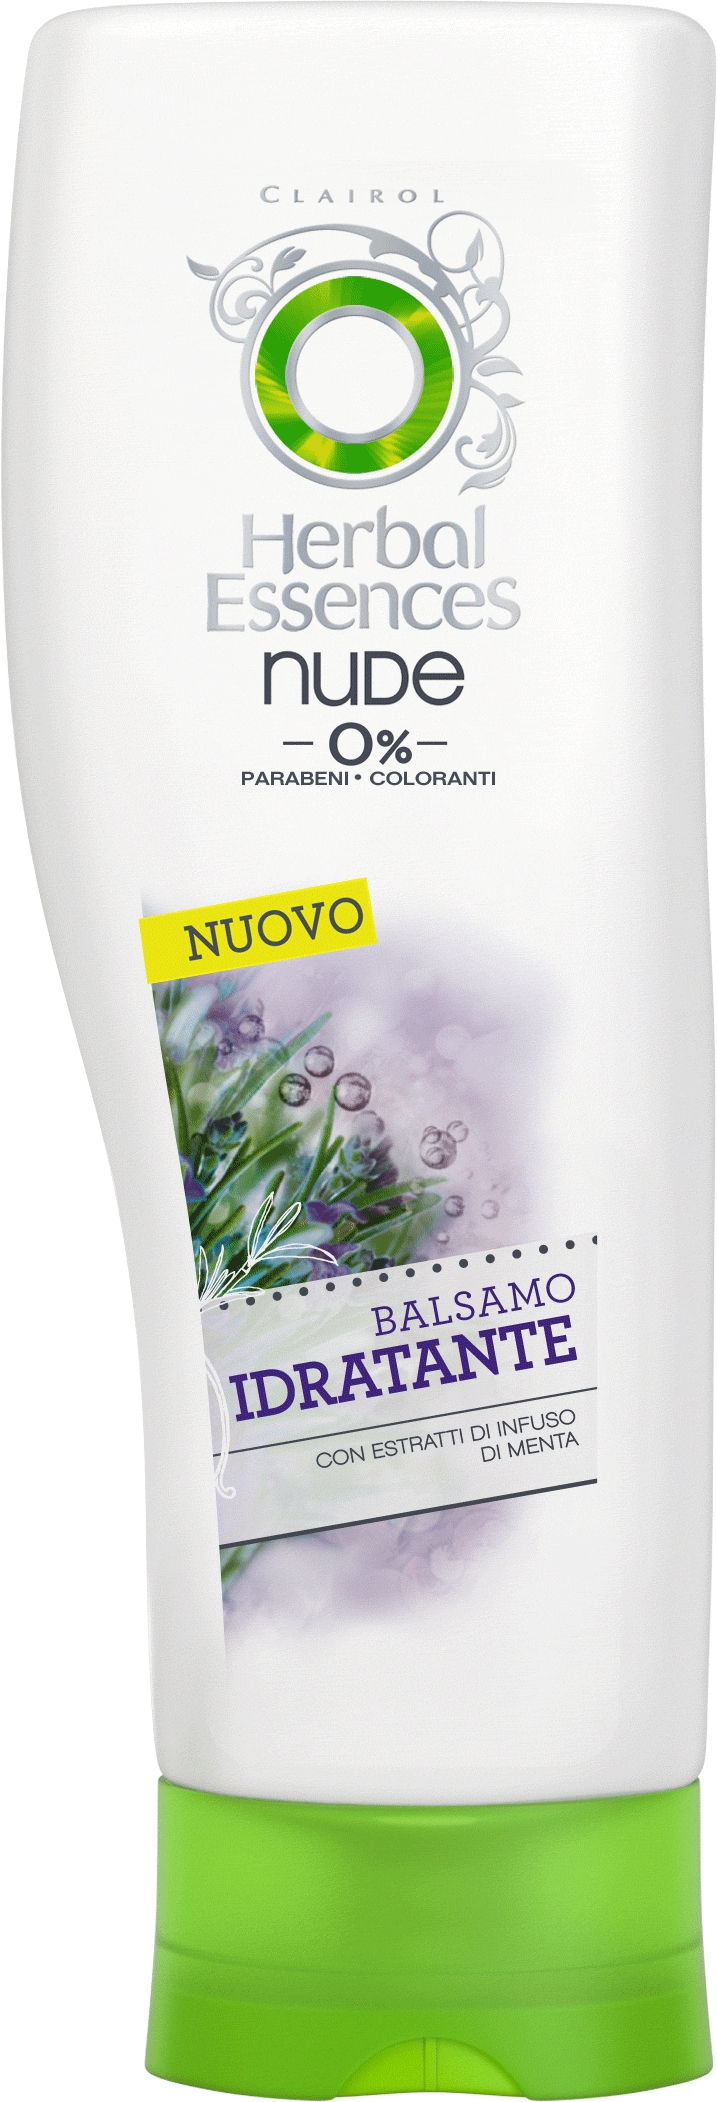 Image of Herbal Essences Nude Idratante - Balsamo 200 ml 4084500129191